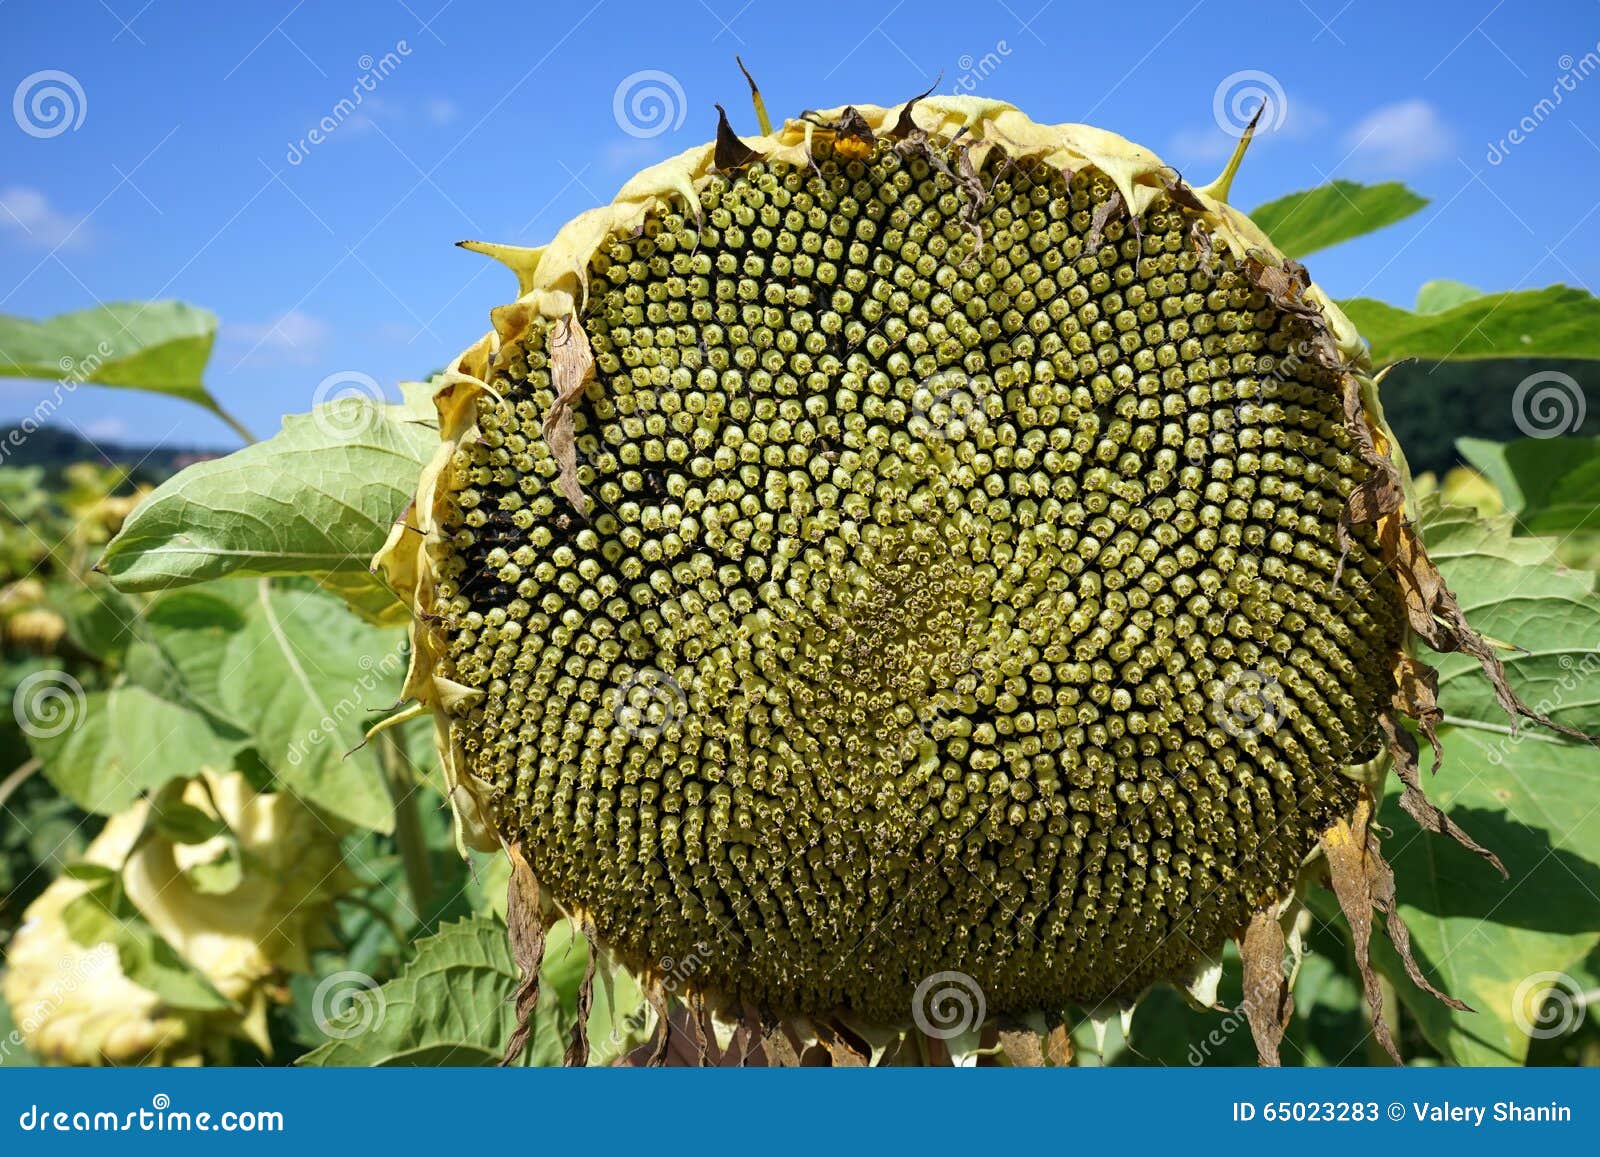 Sunflower seeds stock image. Image of crop, scenics, abundance - 65023283